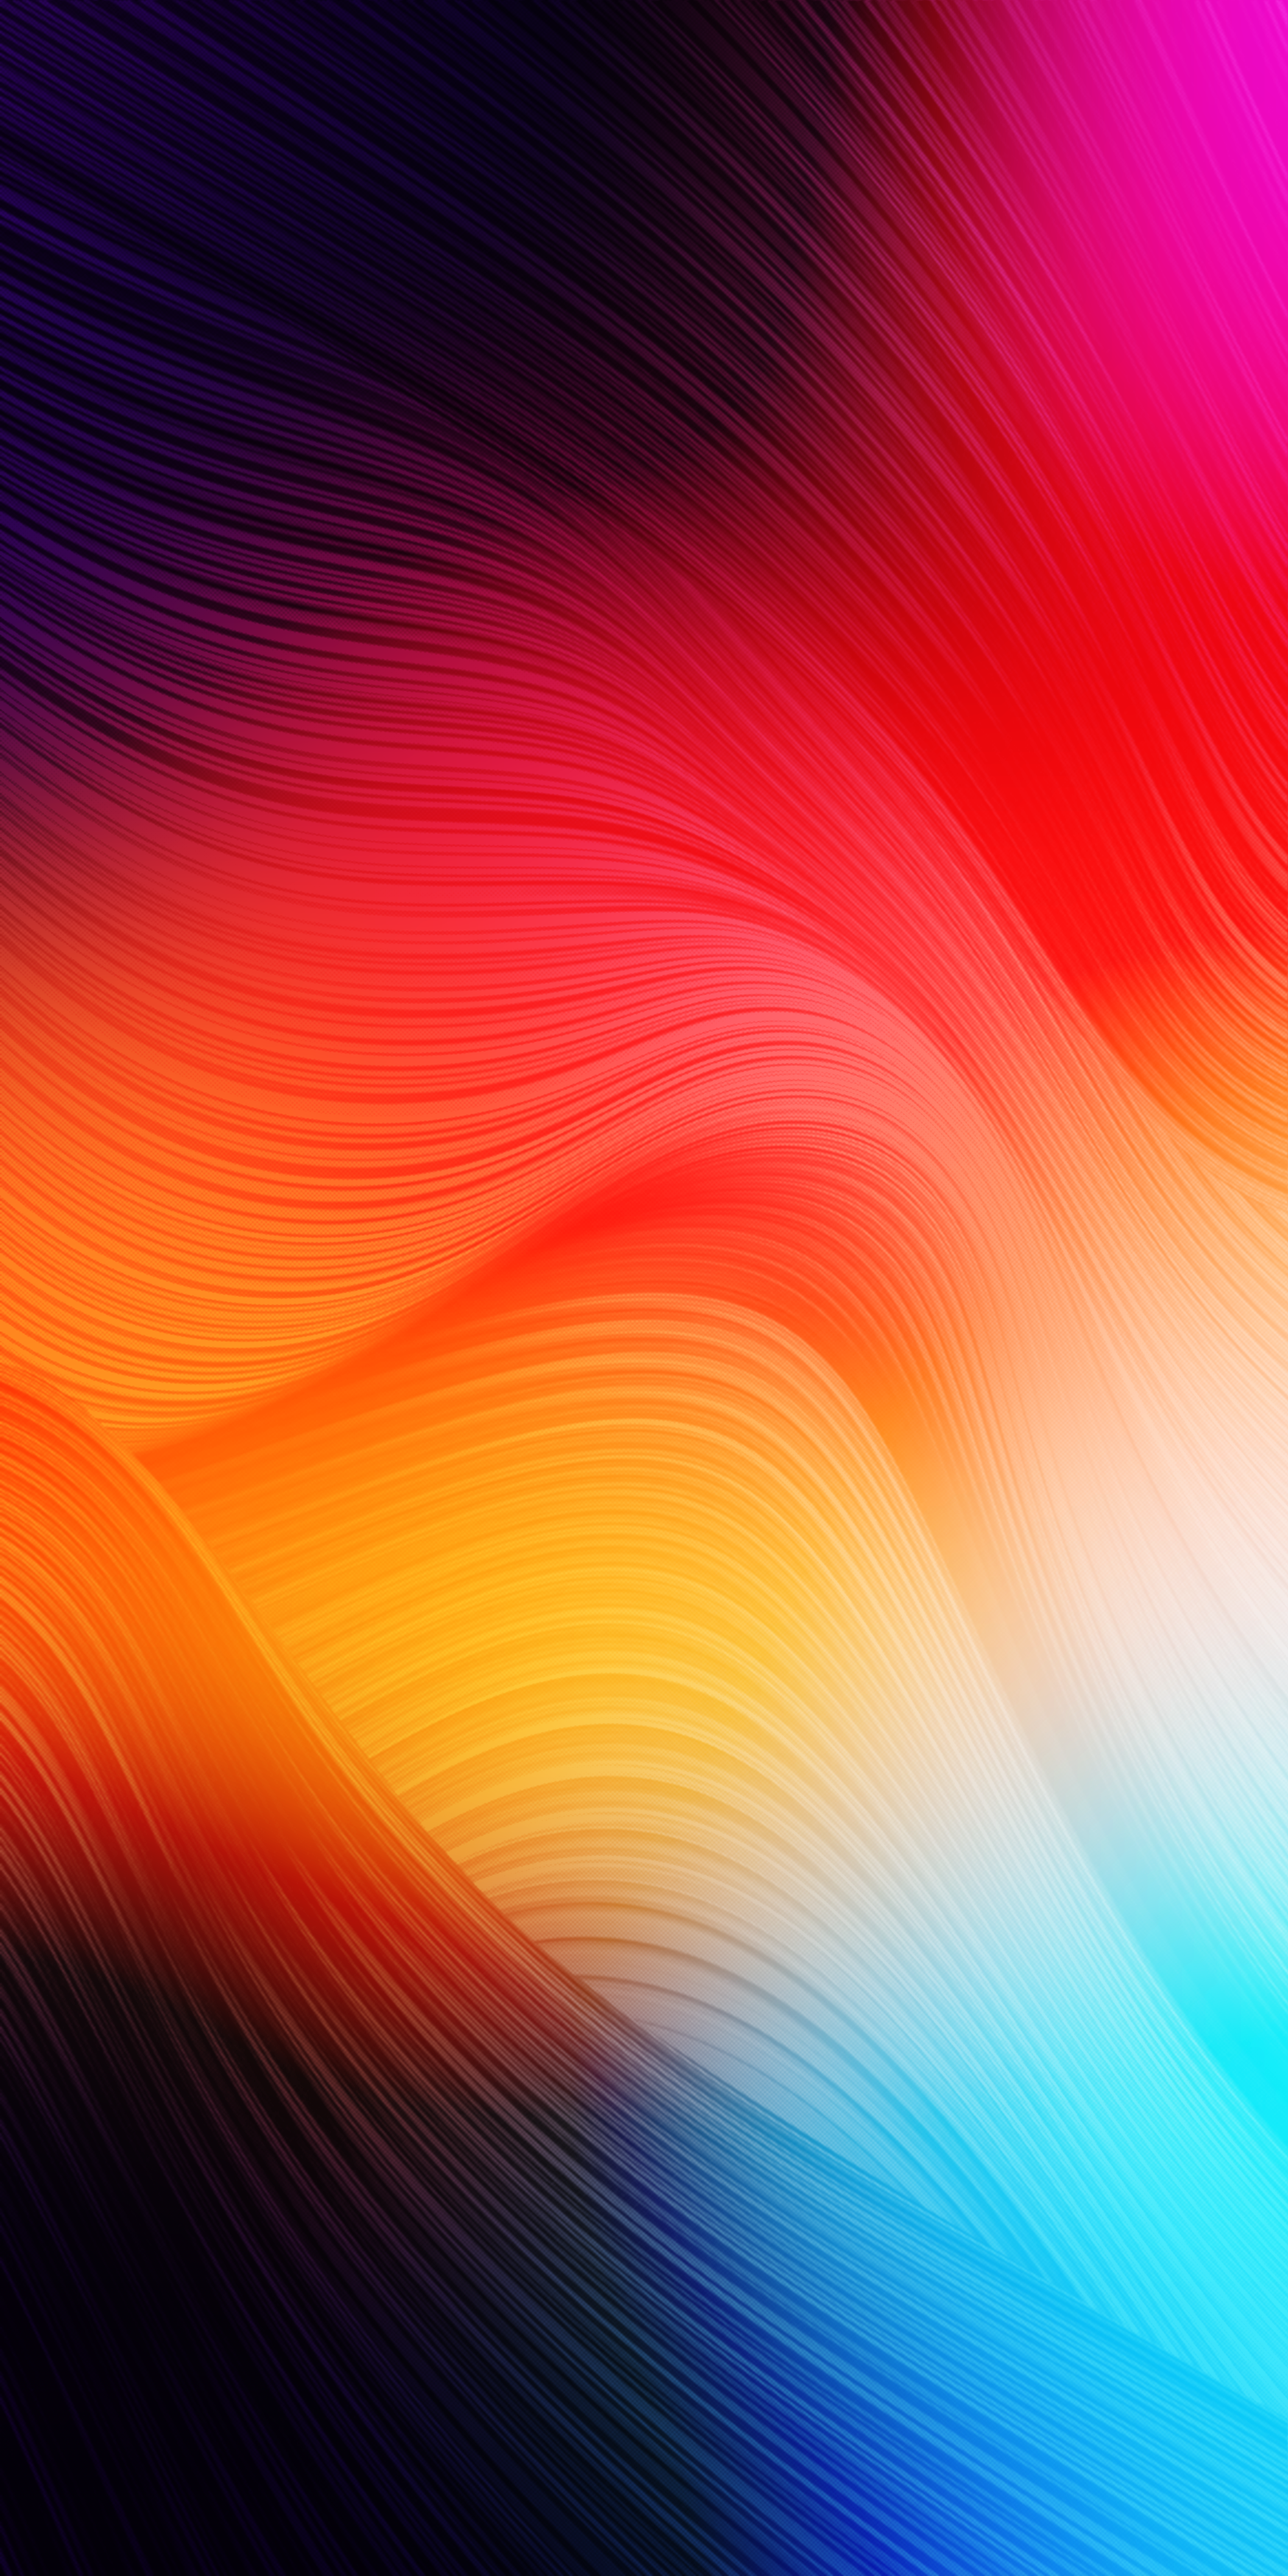 Gradient waves on Twitter. Best iphone wallpaper, Colourful wallpaper iphone, iPhone homescreen wallpaper